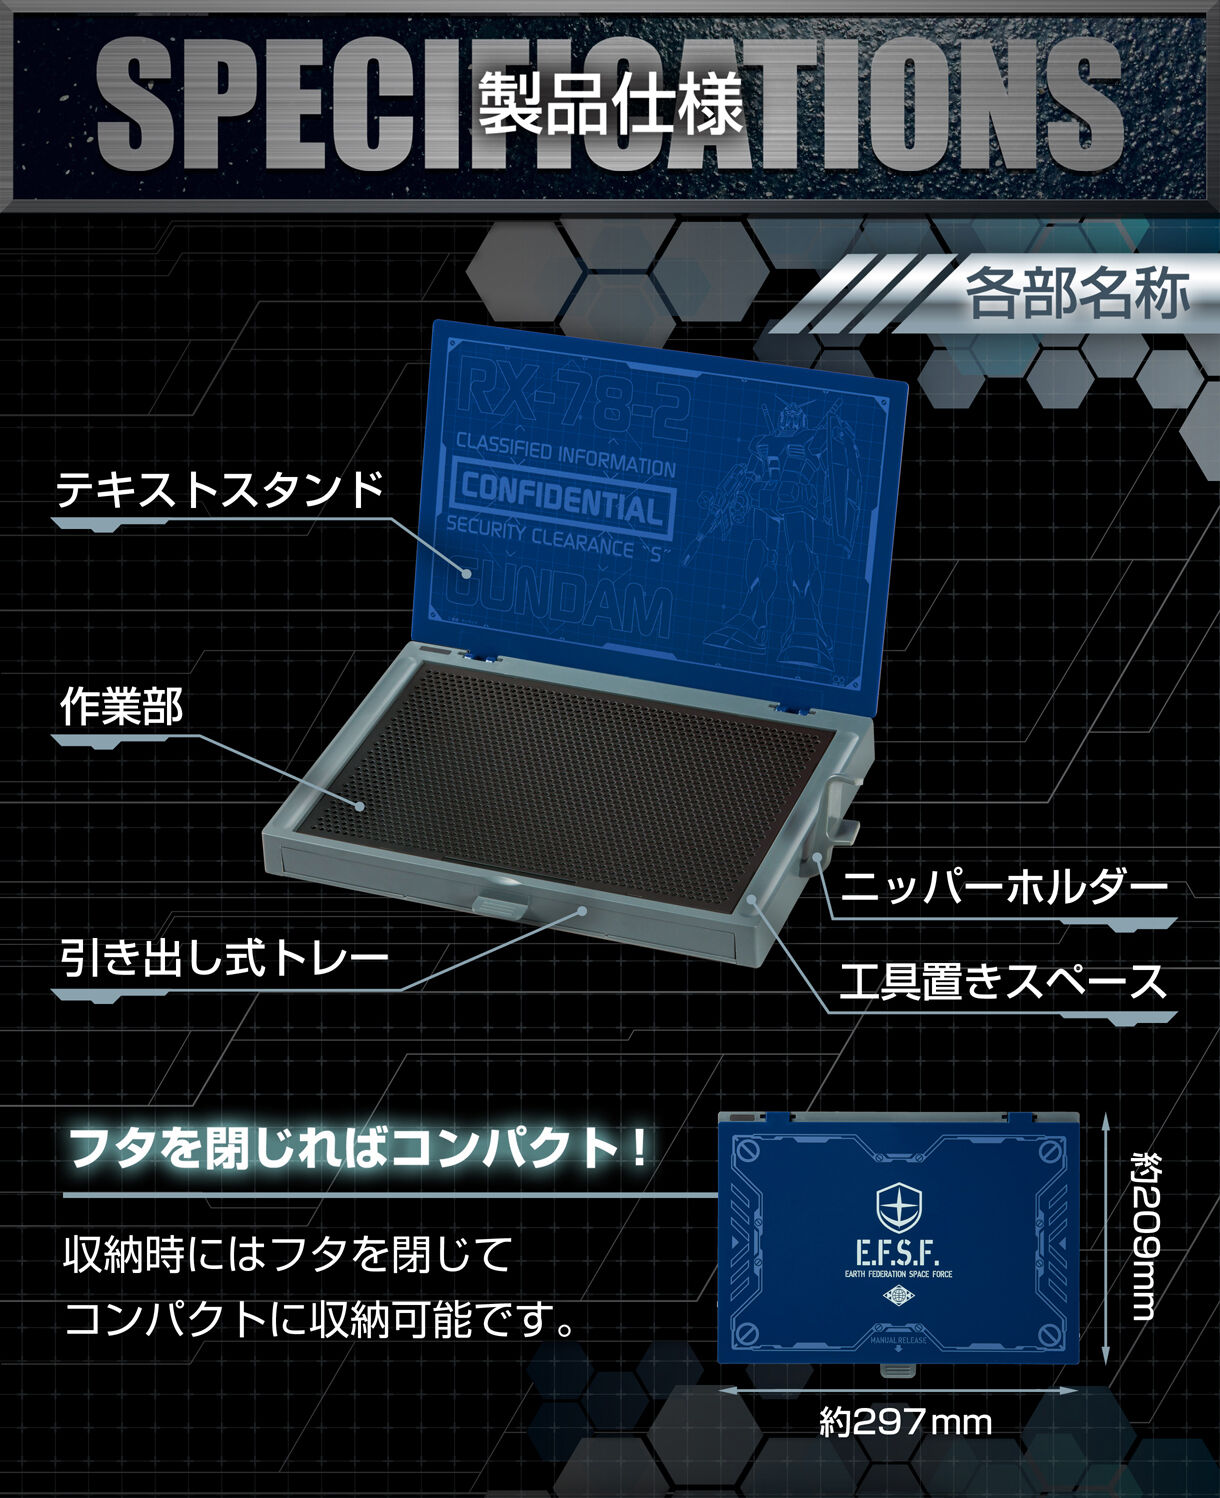 Mobile Suit Gundam Workstation, Sunstar Stationery